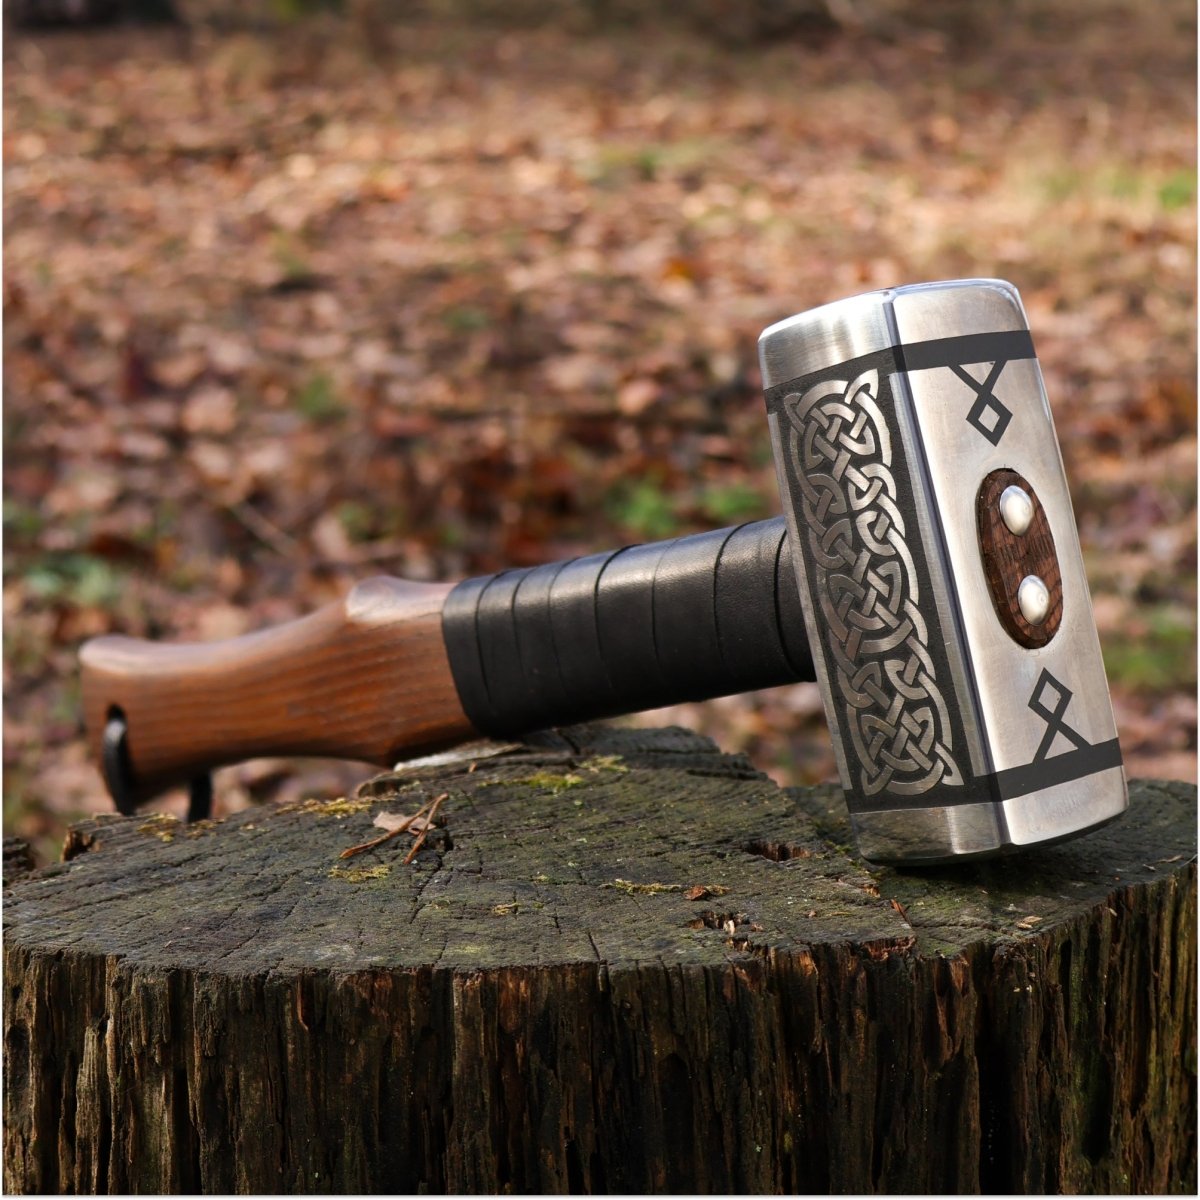 Slavic Svarog Nordic hammer from AncientSmithy